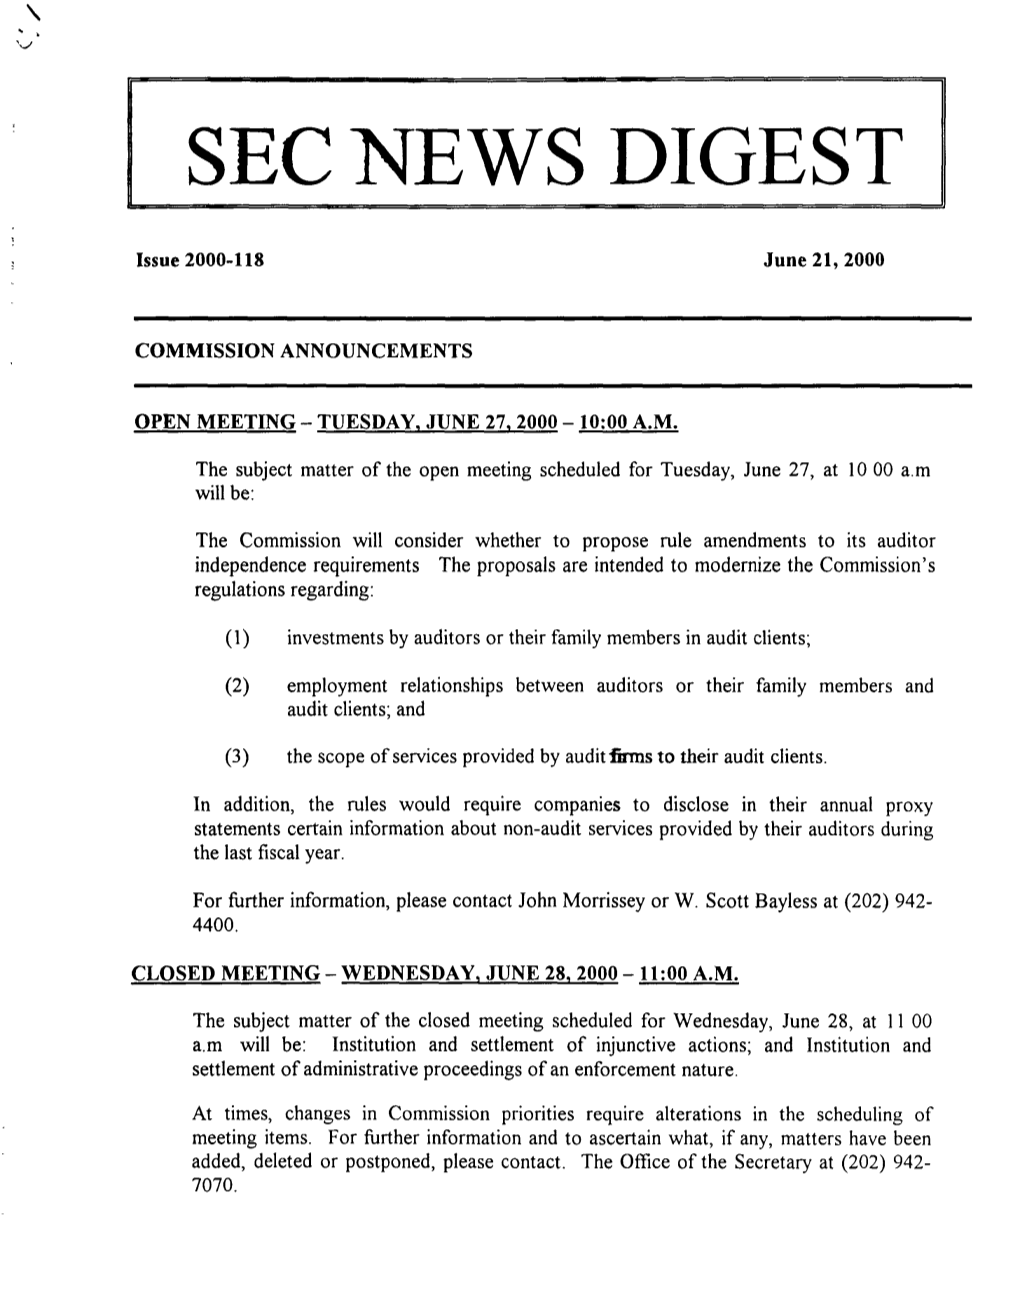 SEC News Digest, 06-21-2000